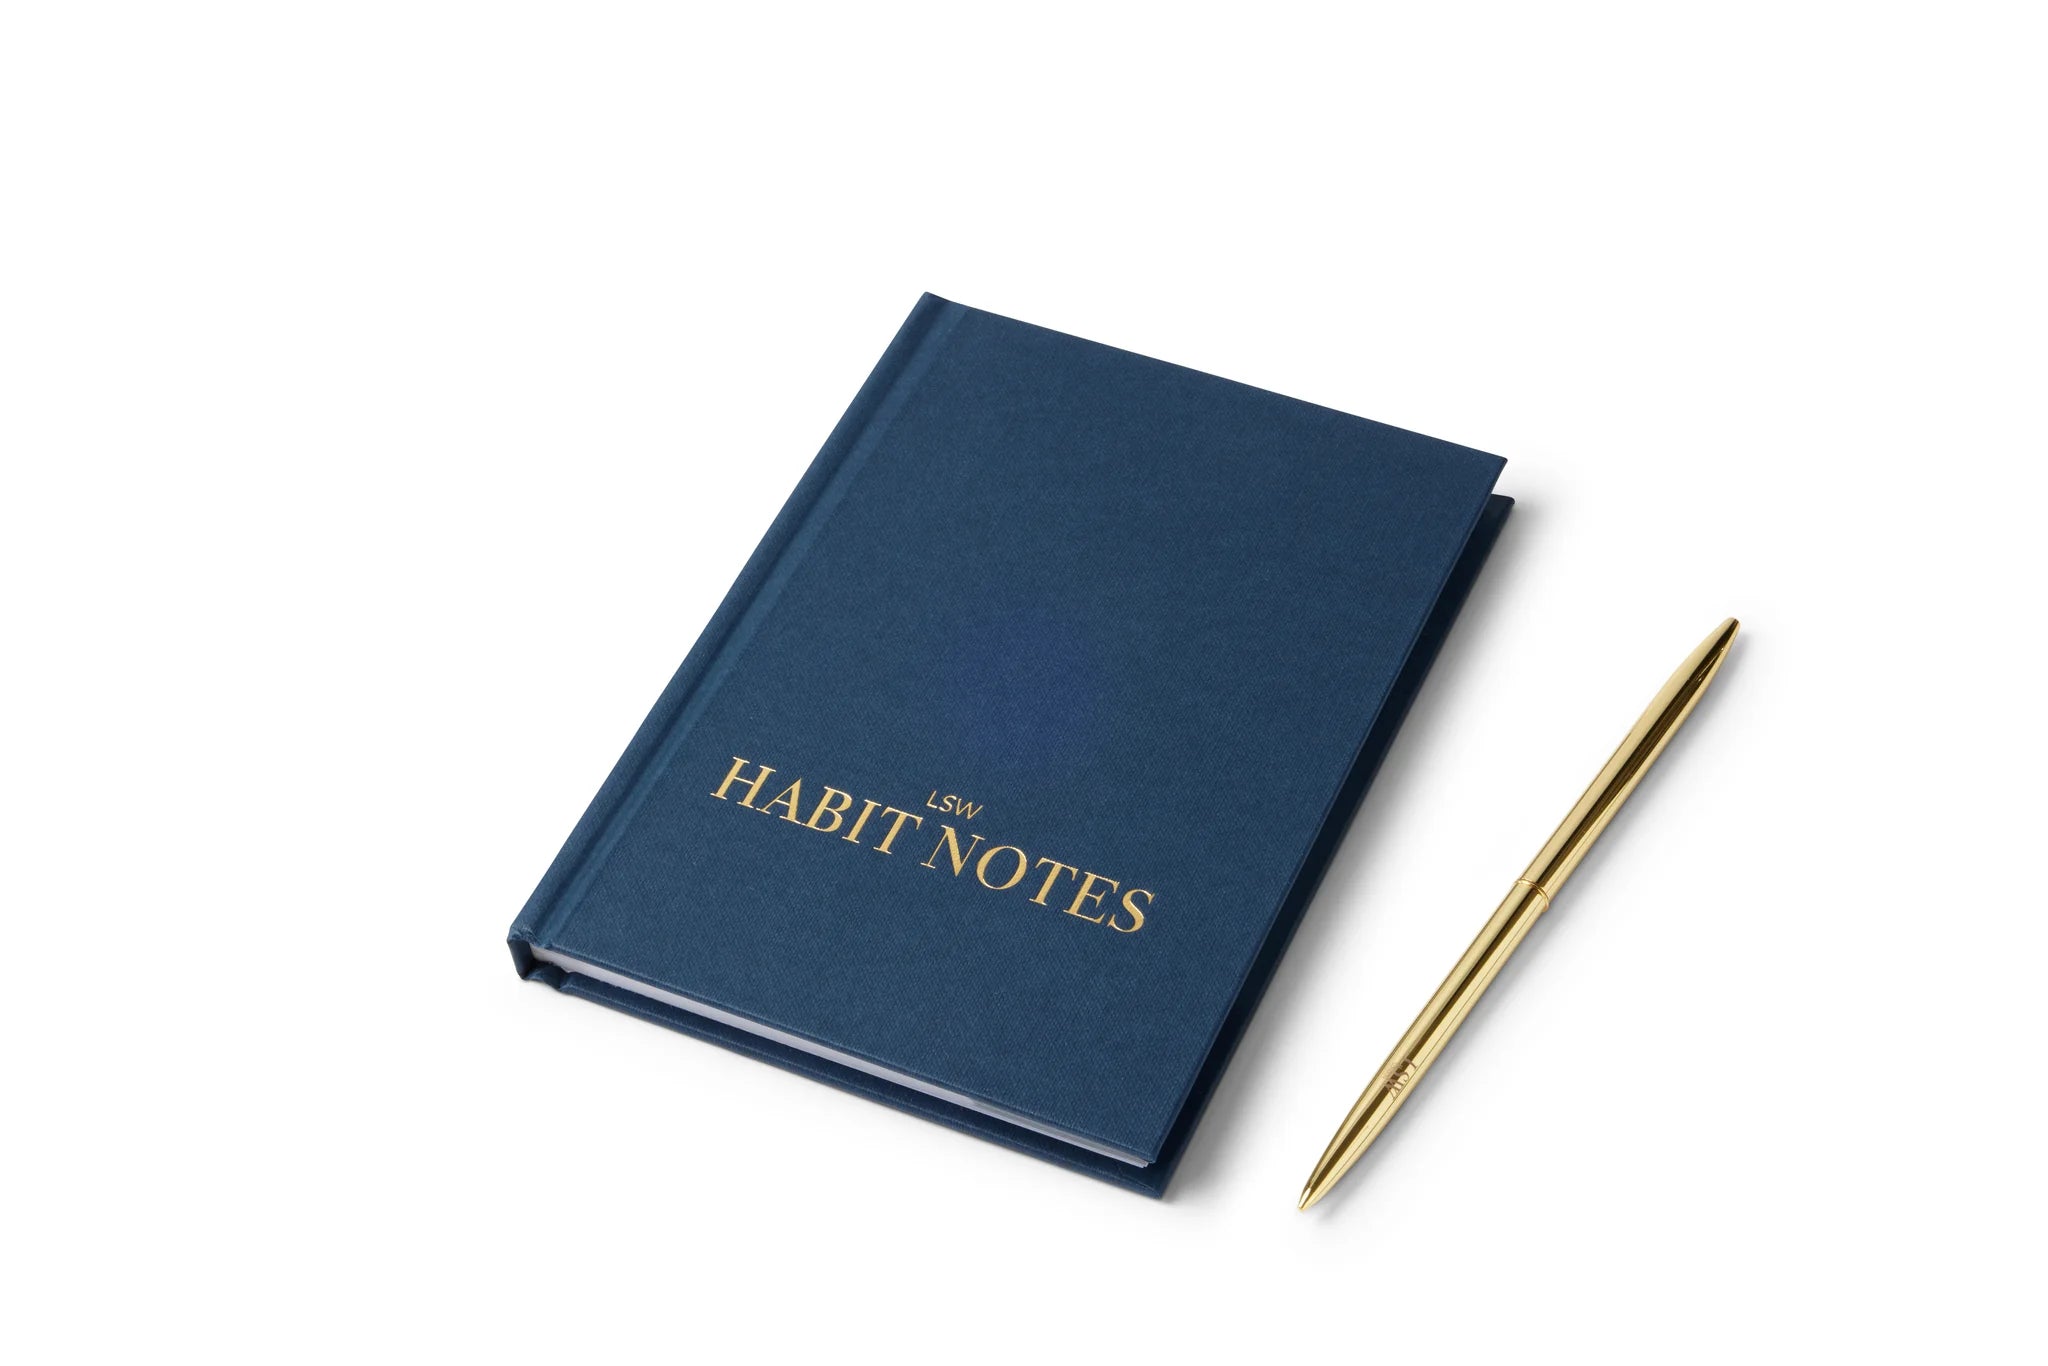 LSW Habit Notes